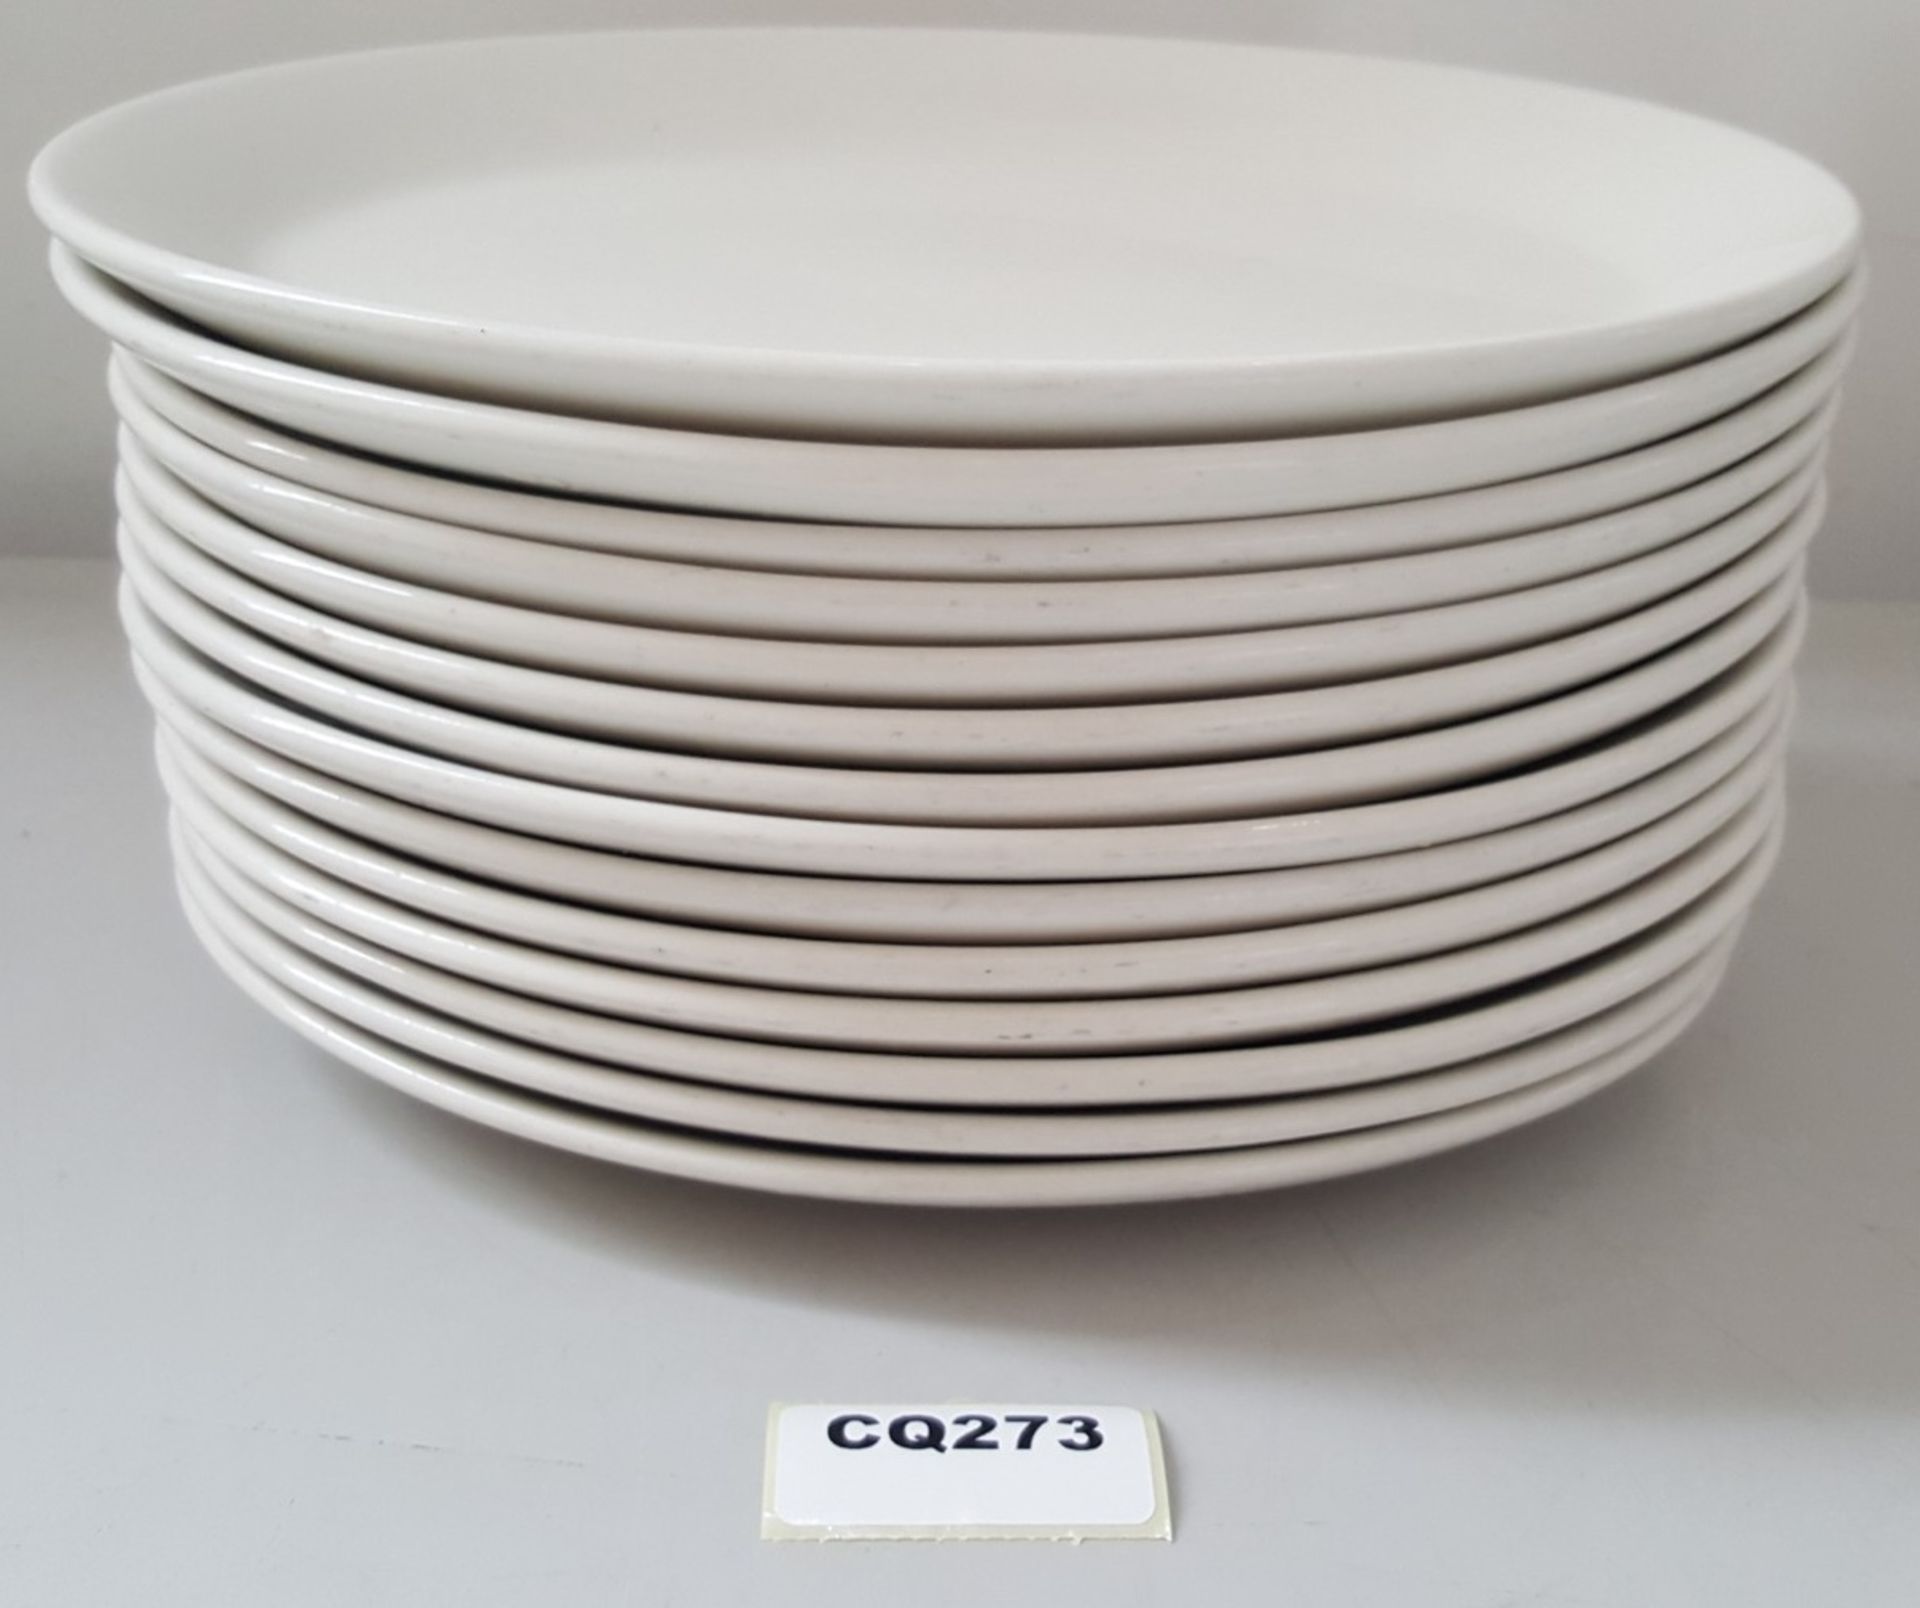 14 x Steelite Oval Serving Plates White L28/W21.5CM - Ref CQ273